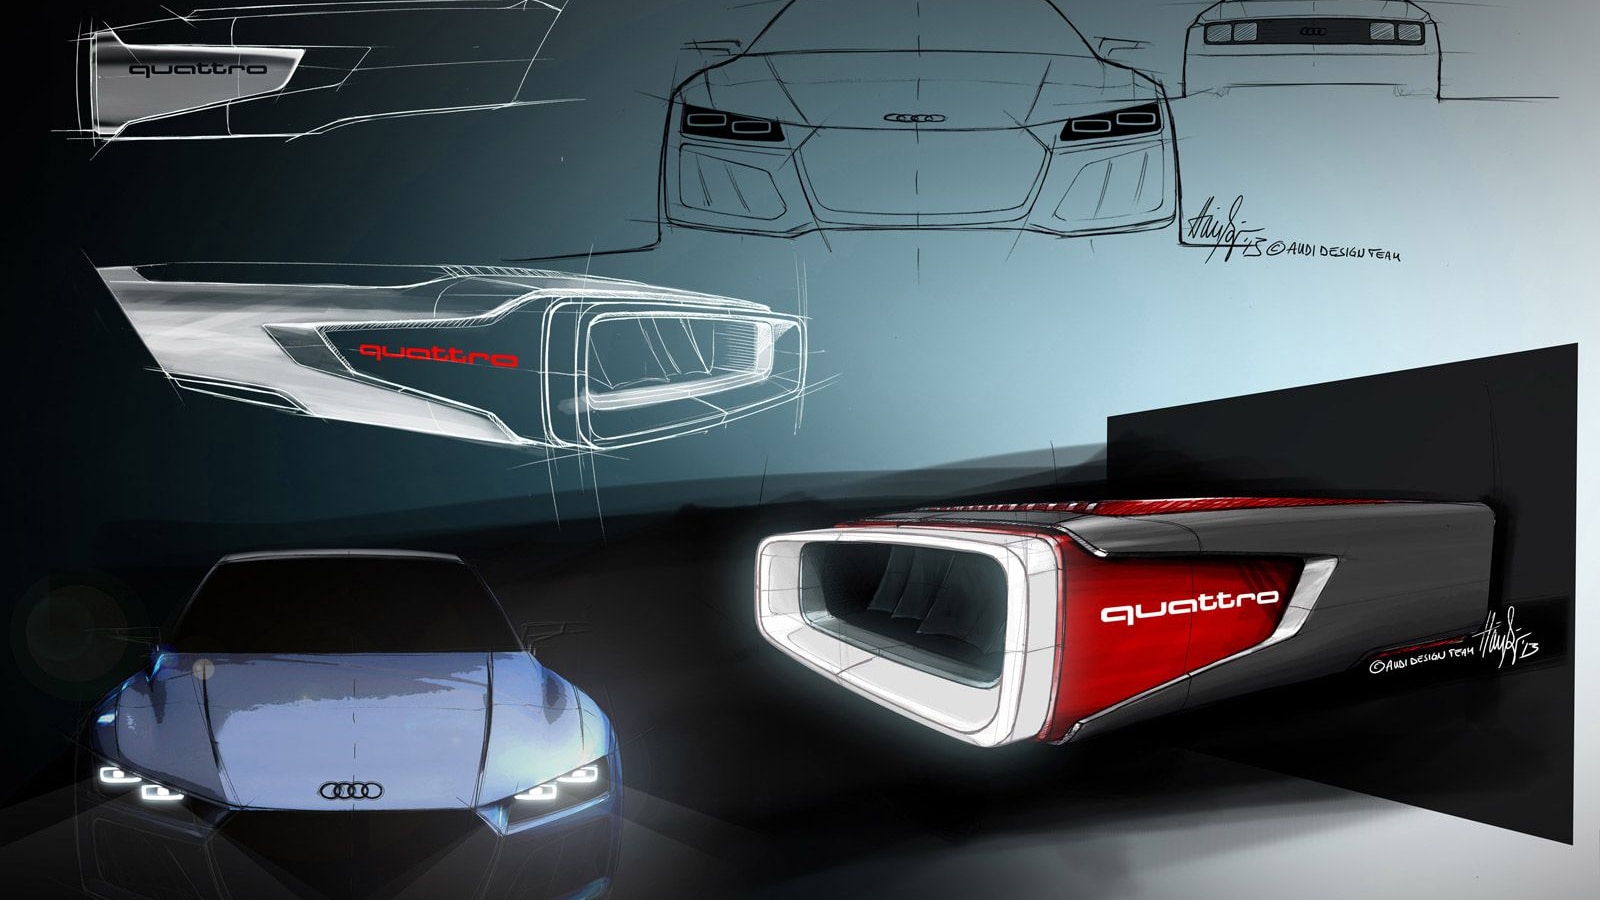 Teaser for new Audi Quattro concept